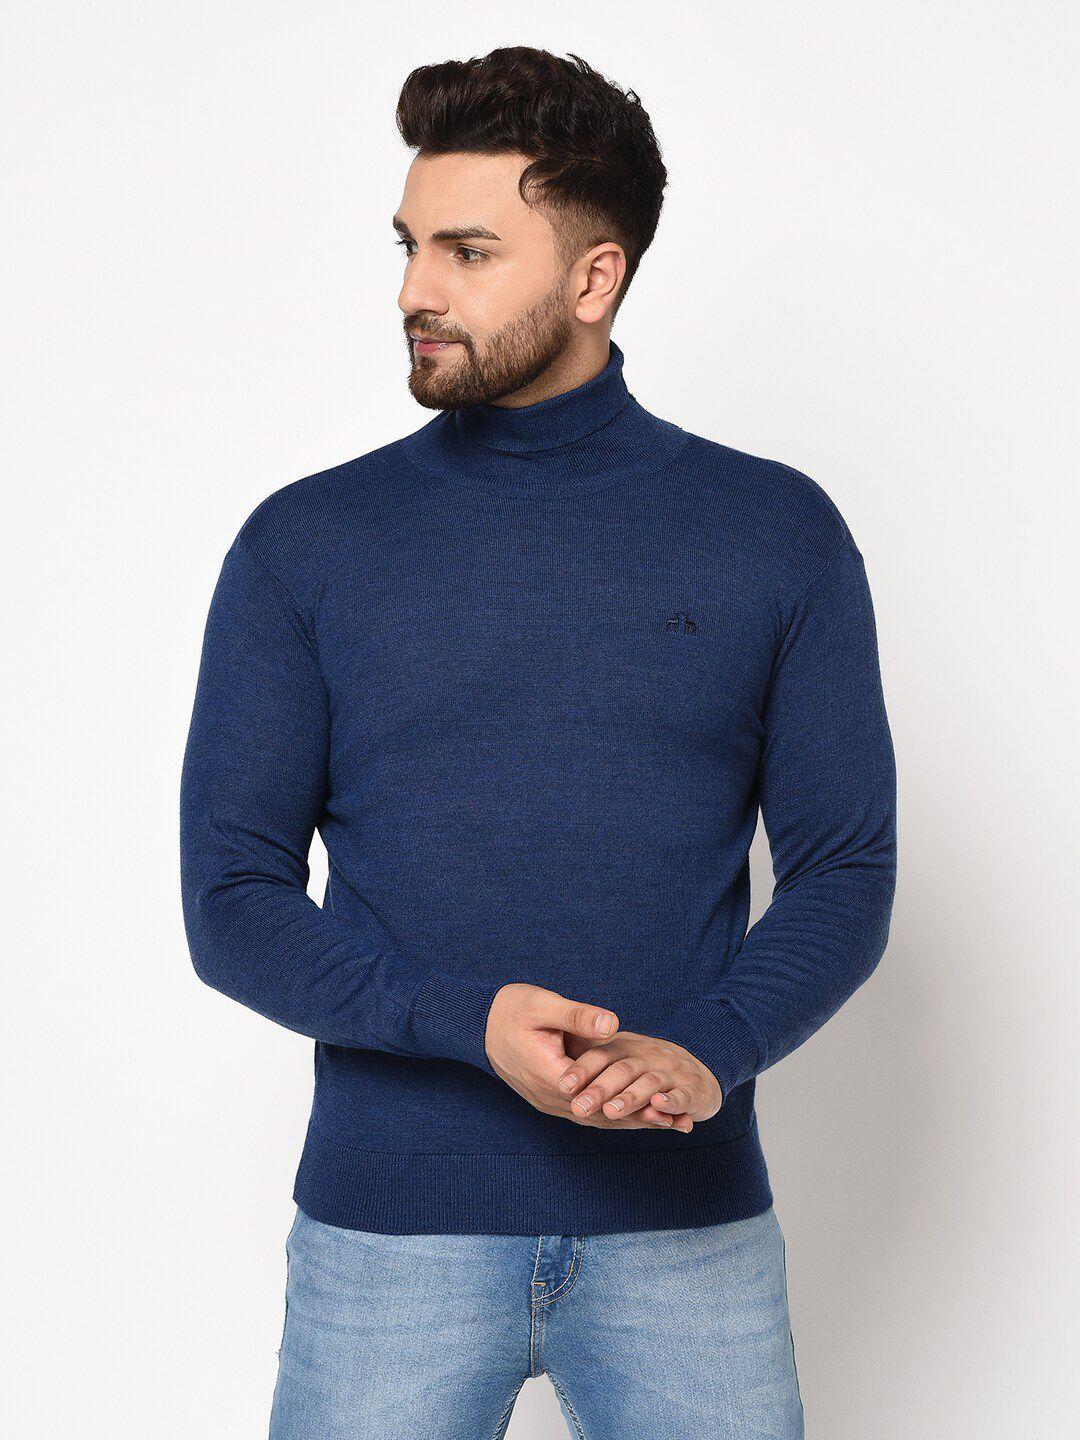 98 Degree North Men Navy Blue Pullover Sweater